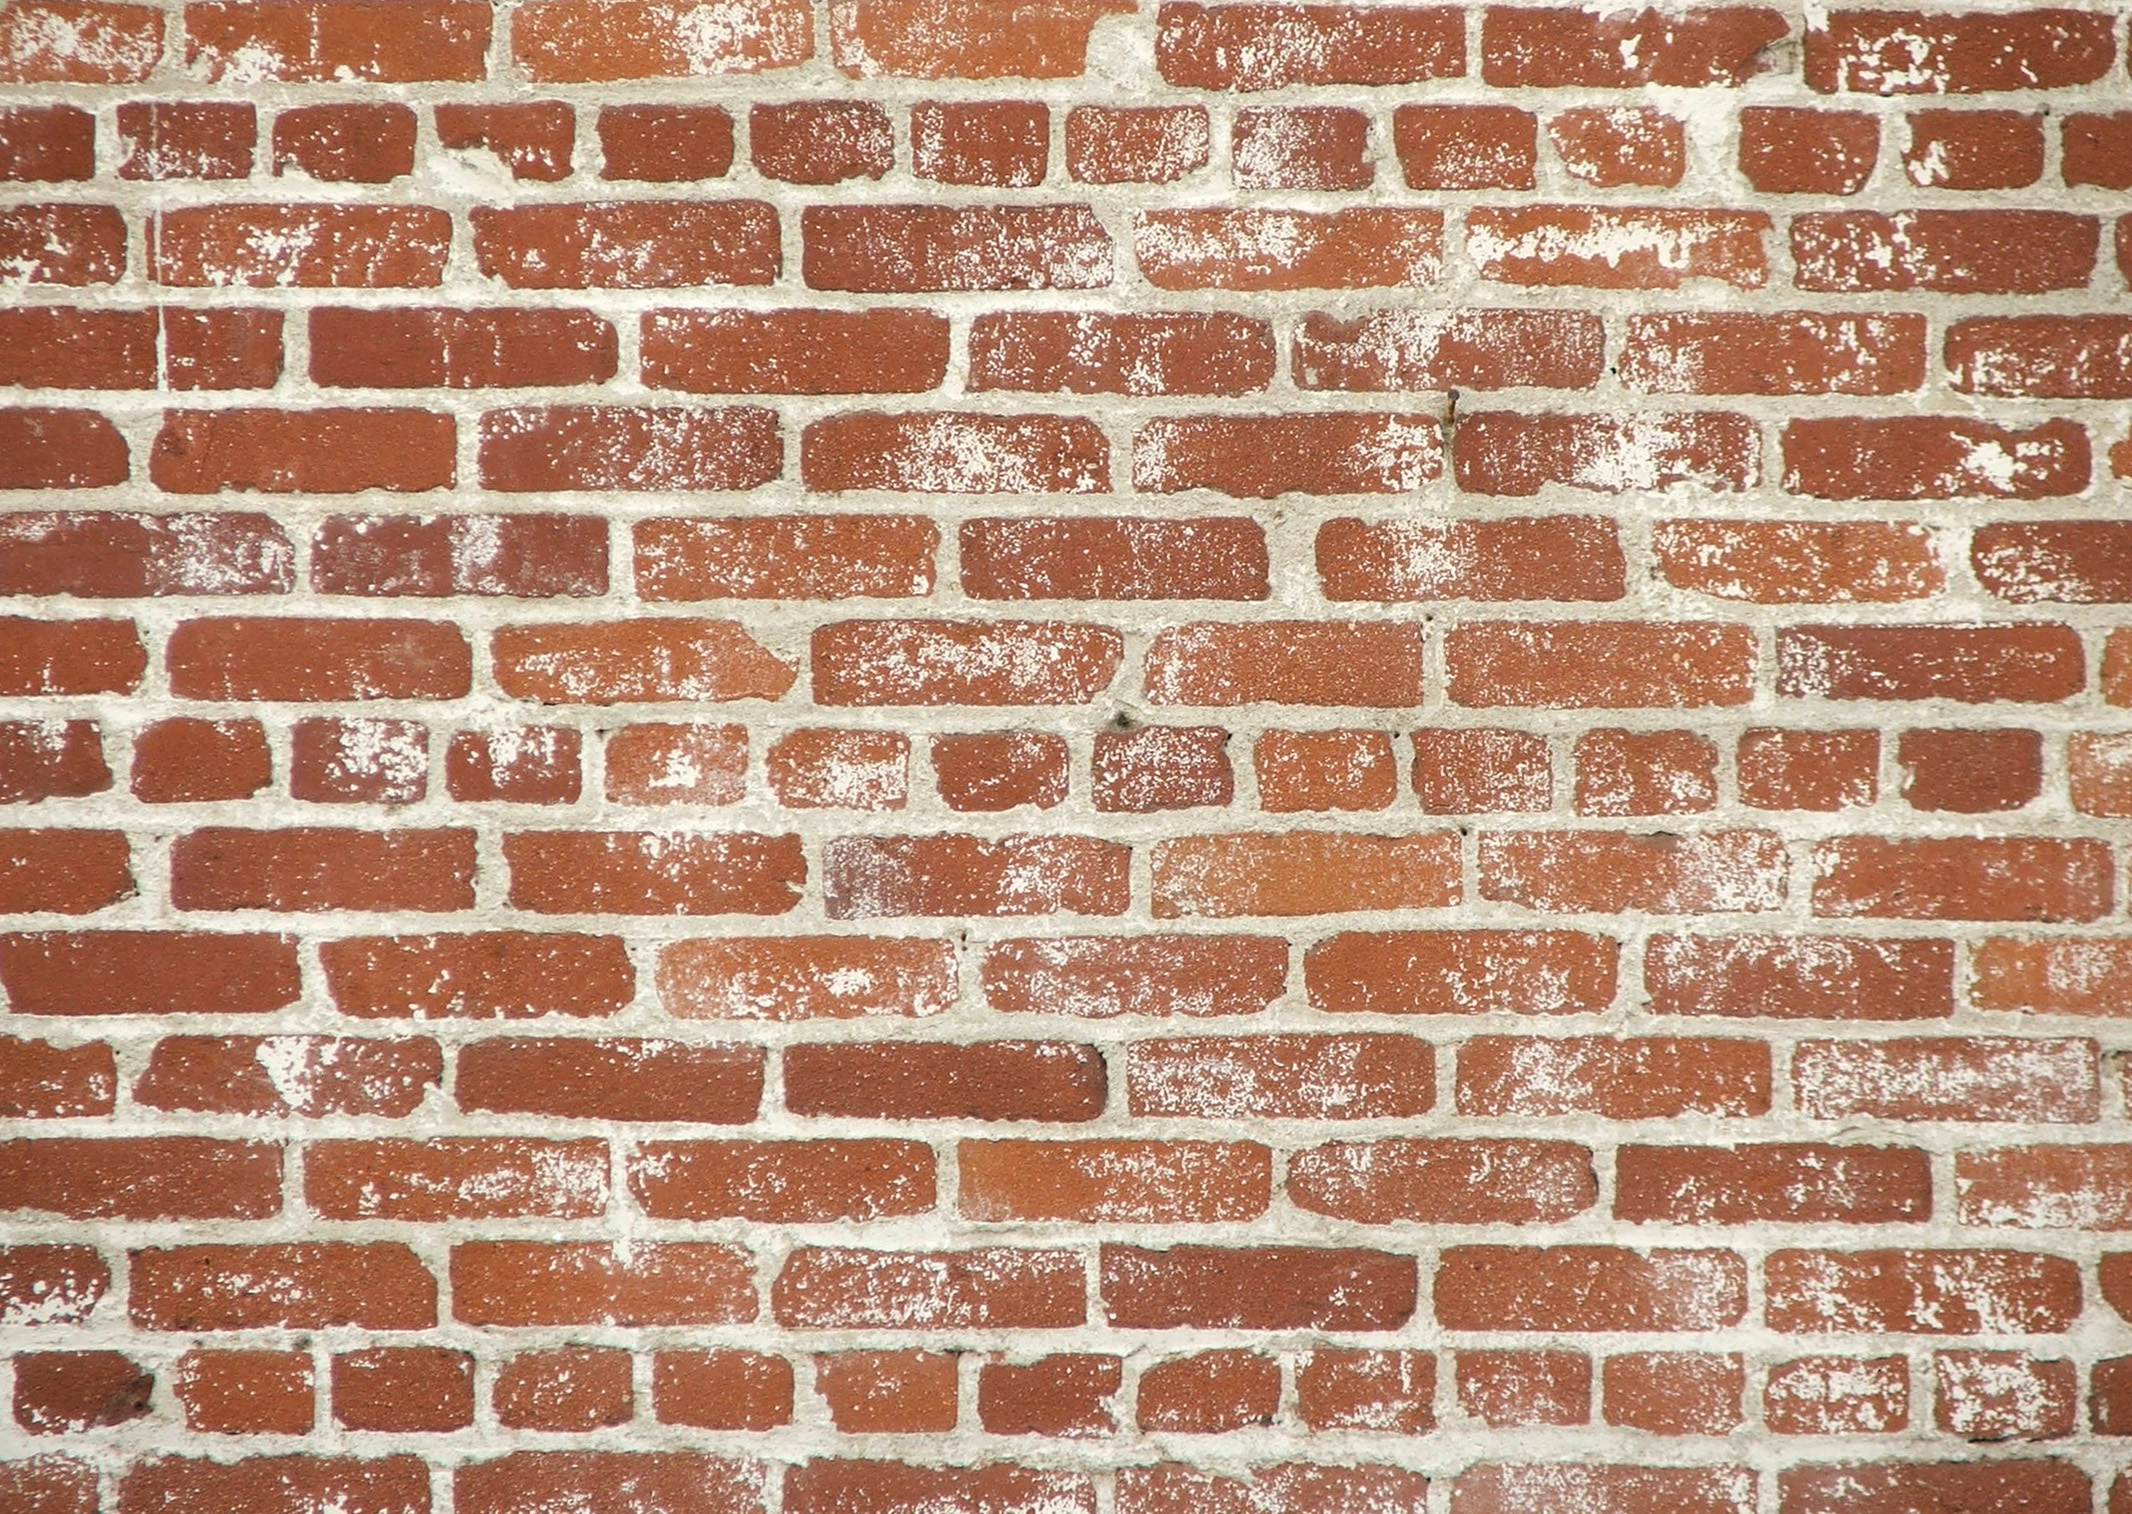 Brick Wall Texture Photo Image Bricks Masonry